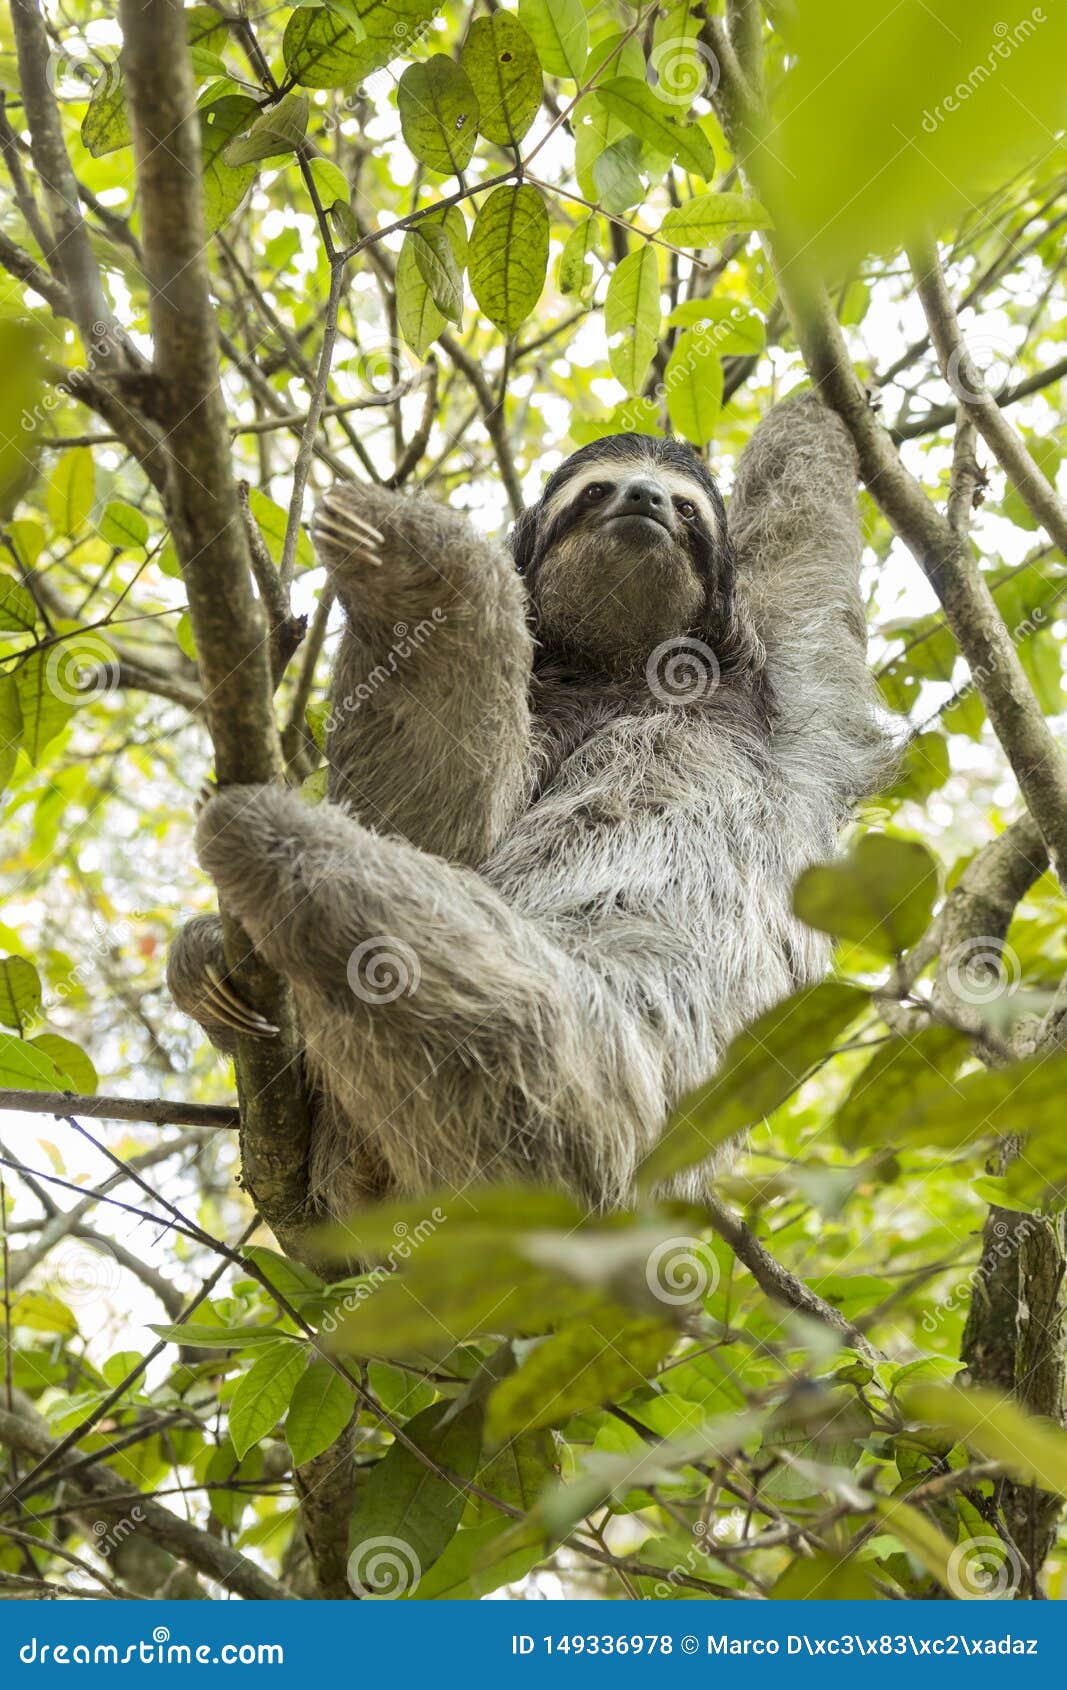 three-toed sloth in costa rica